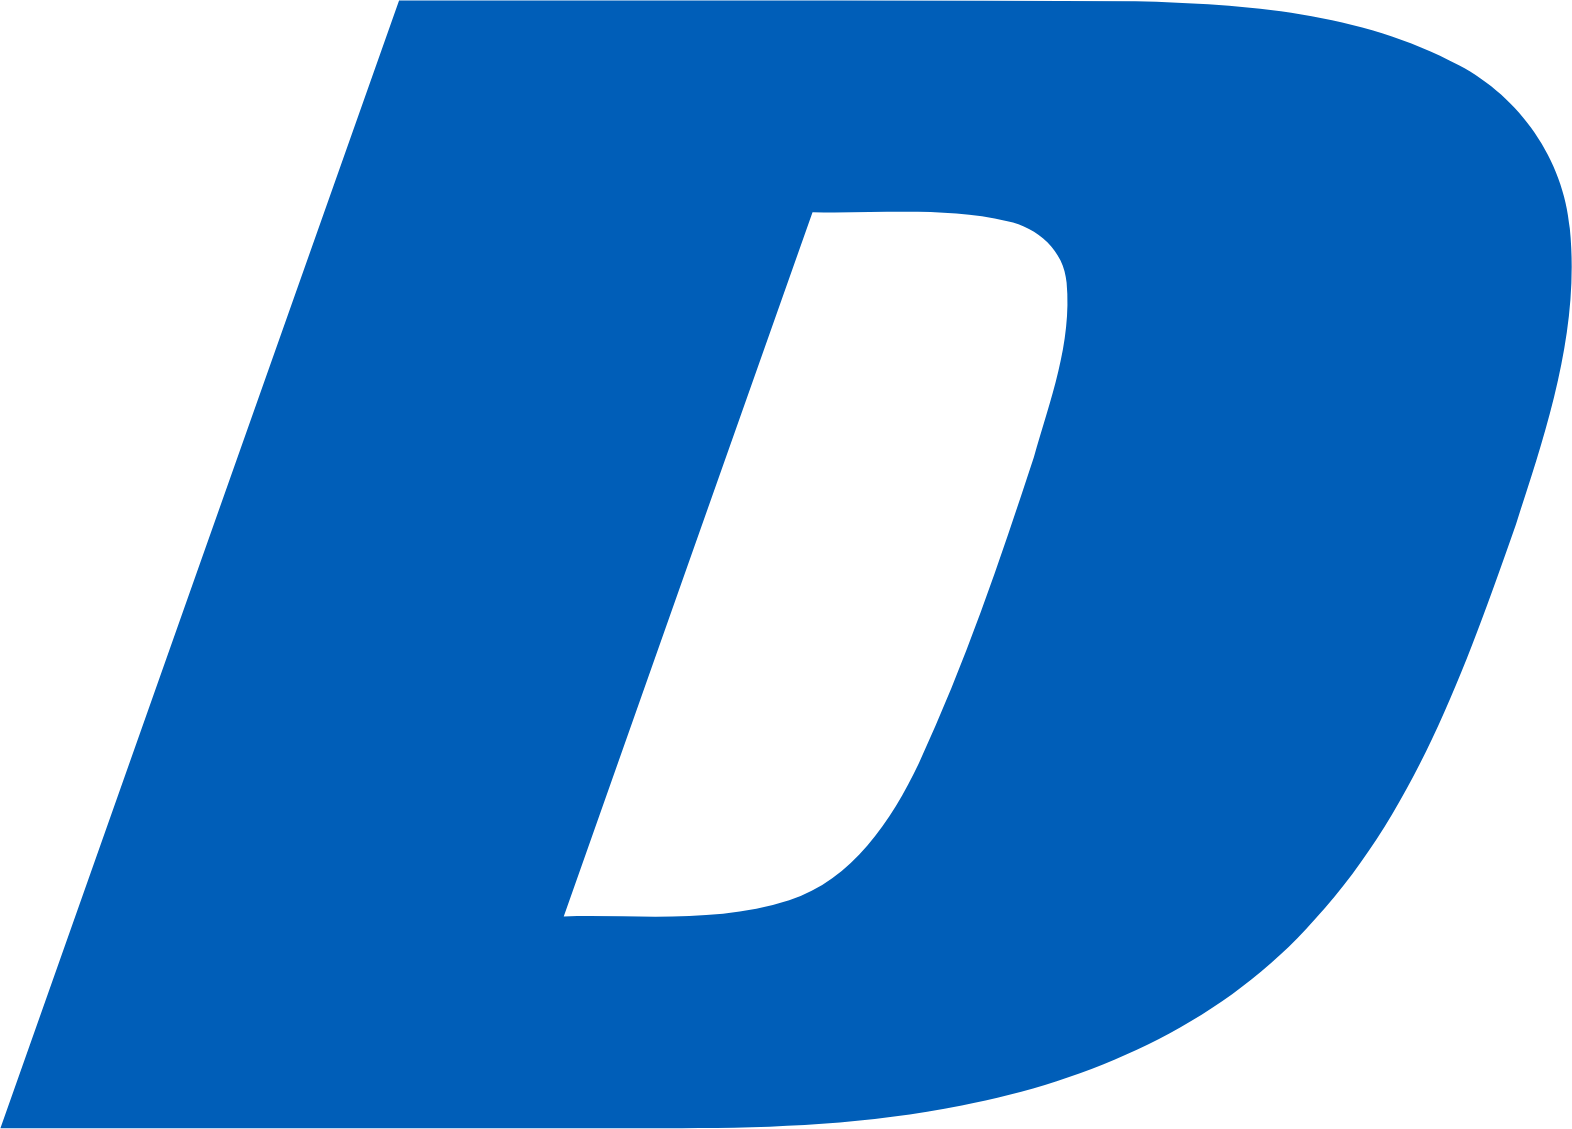 Doosan Enerbility logo (PNG transparent)